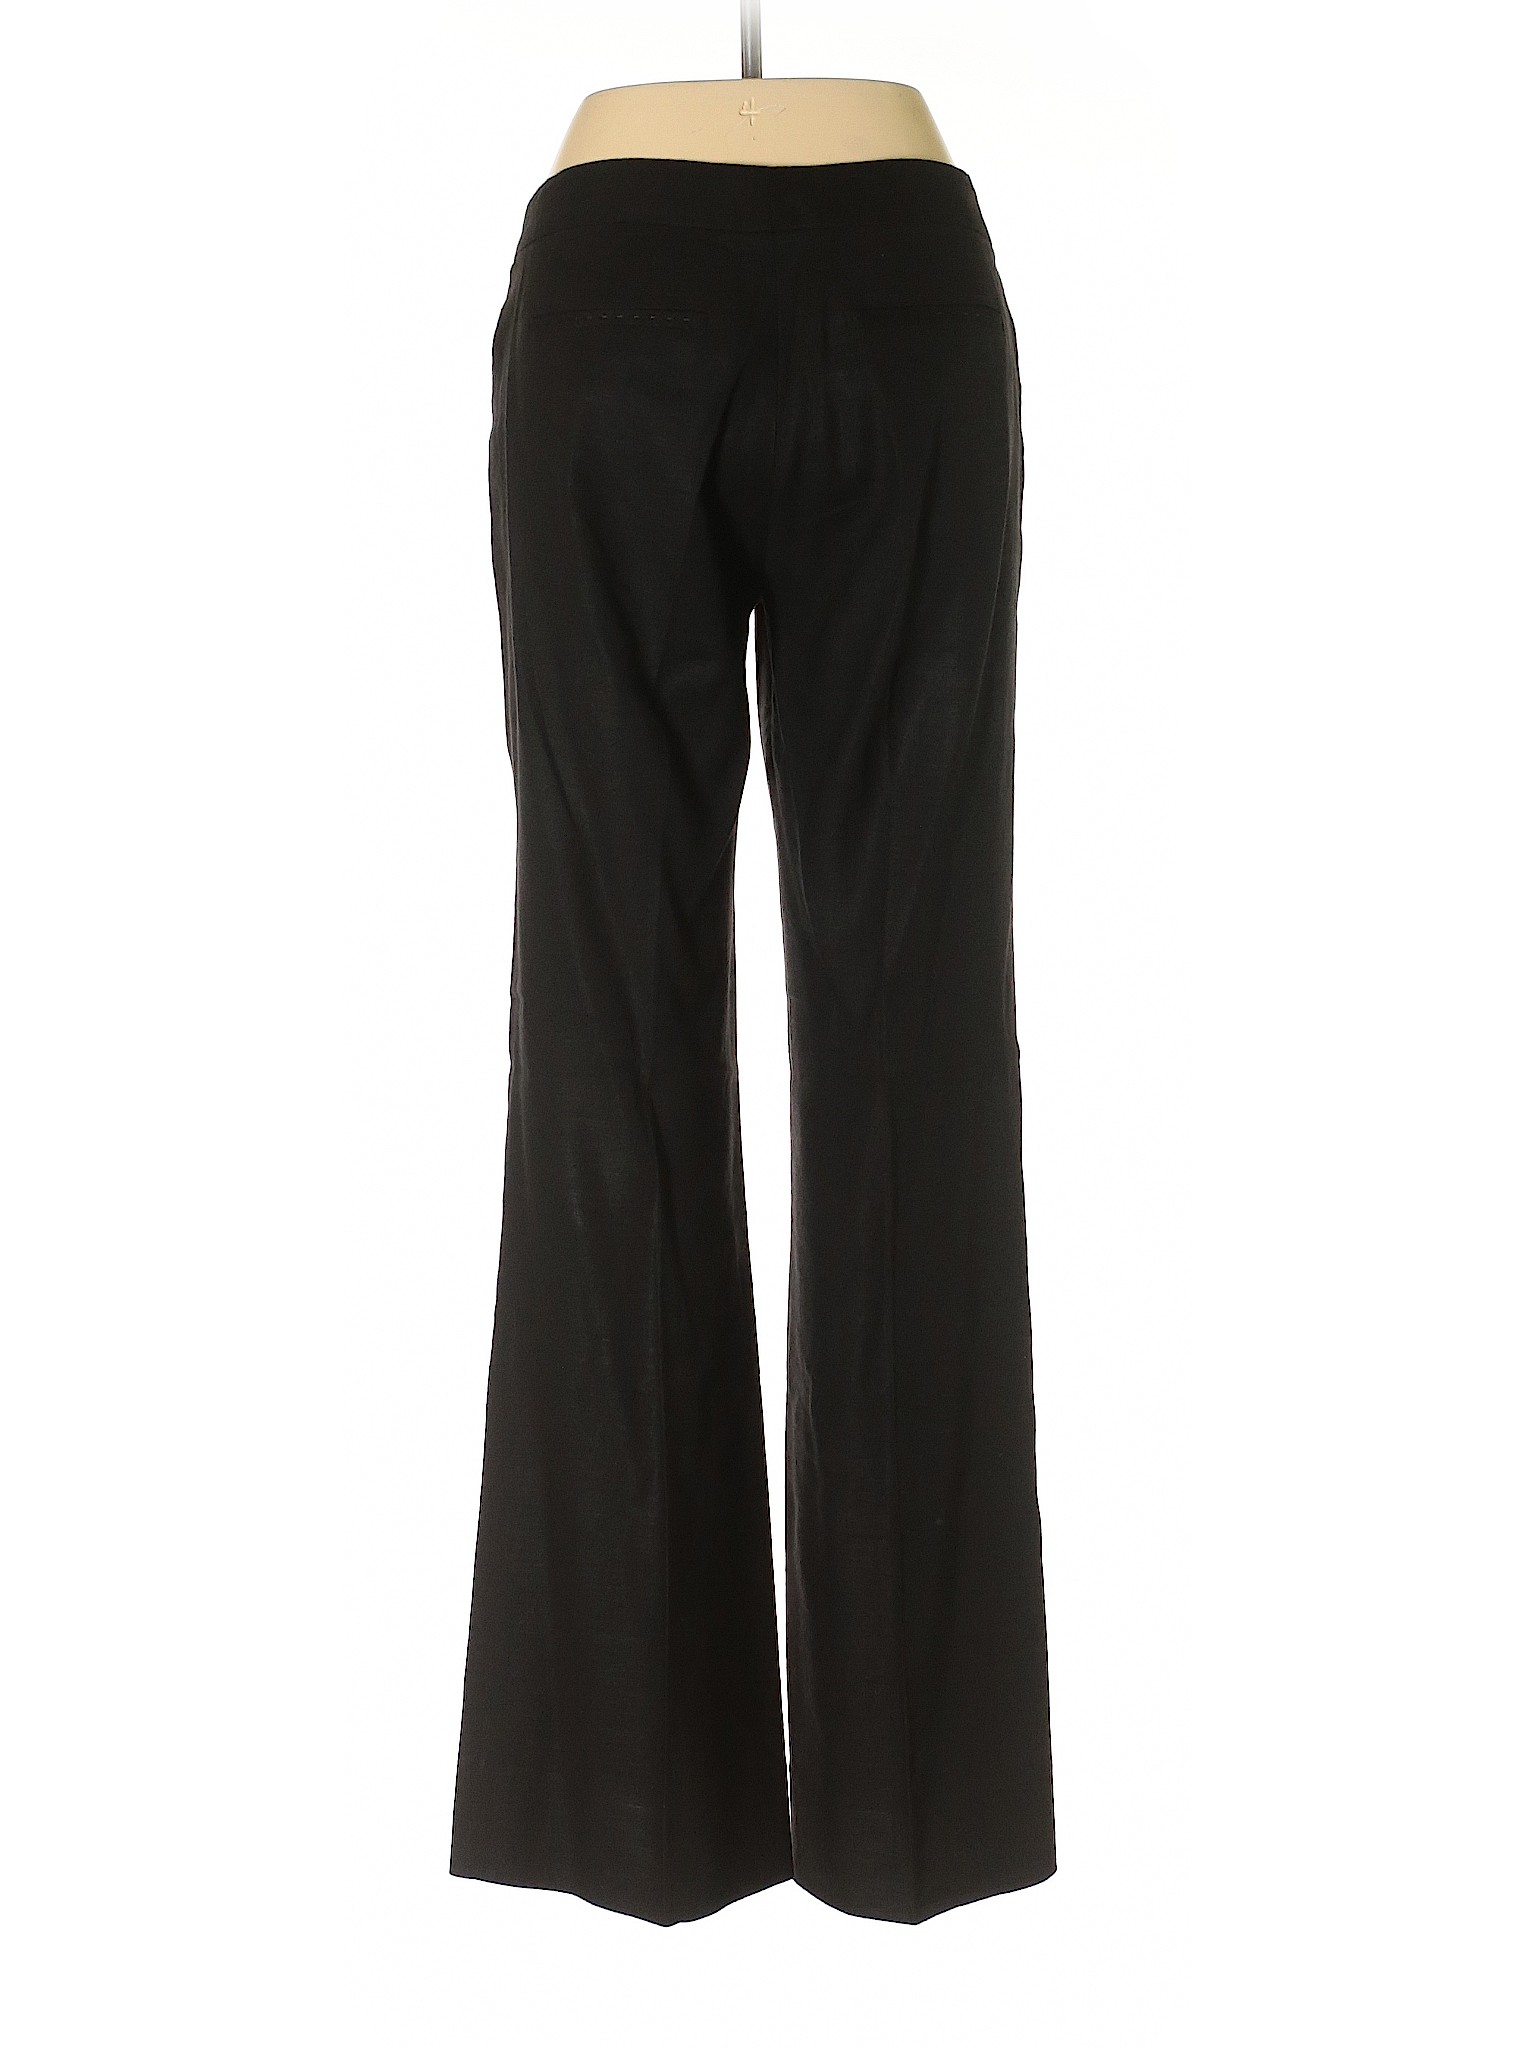 Elie Tahari Women Black Dress Pants 2 | eBay